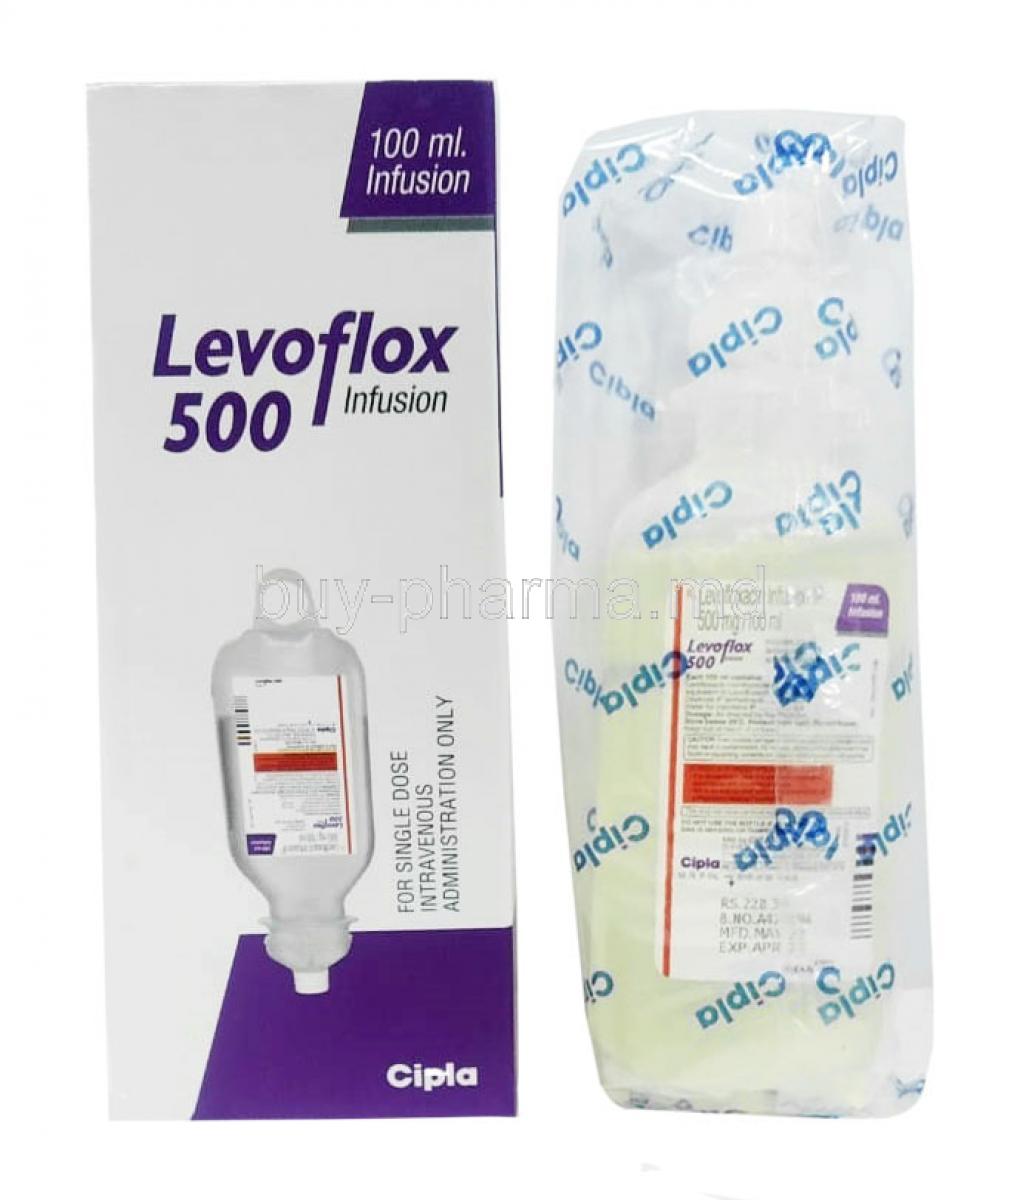 Levoflox Infusion, Levofloxacin 500mg, Infusion 100mL, Cipla Ltd, Box, Bottle